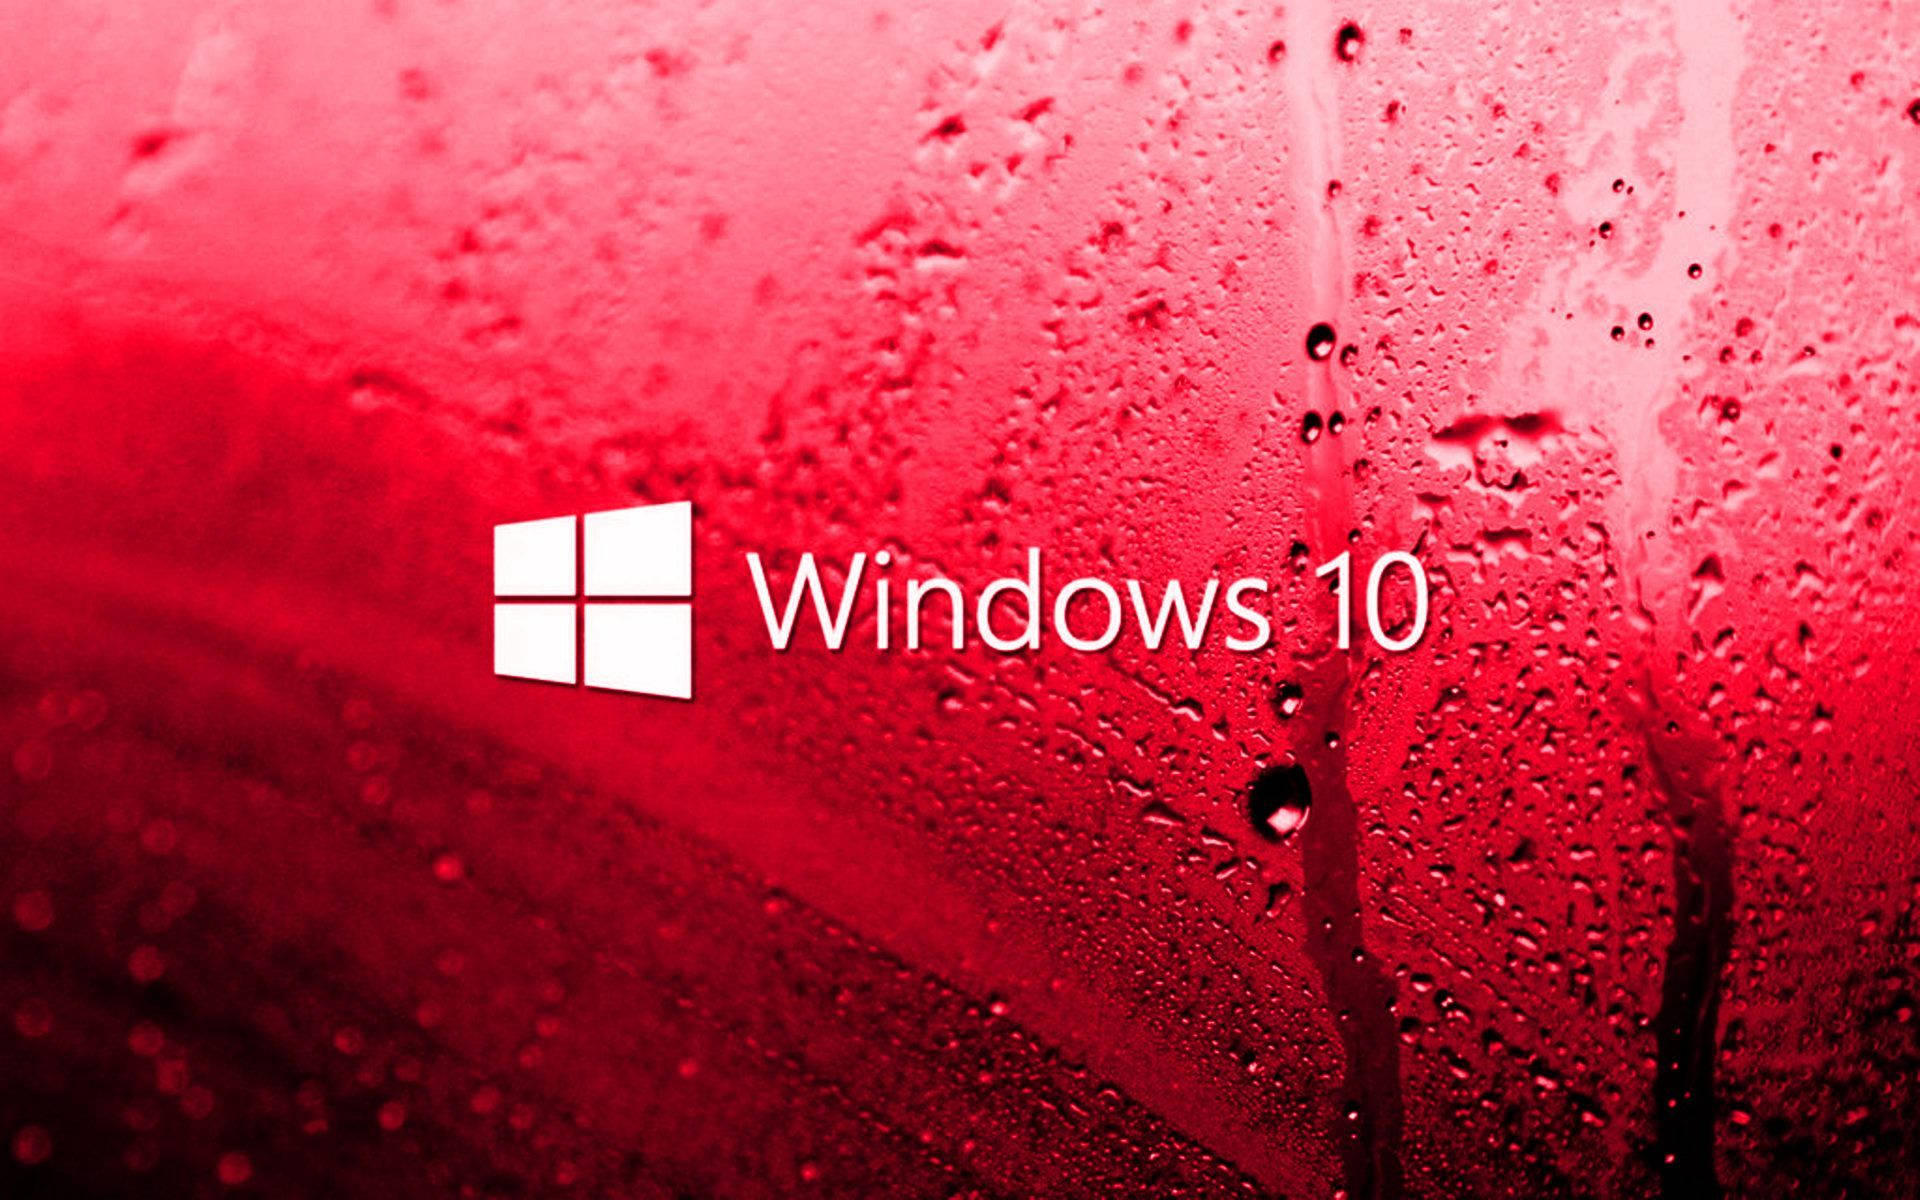 Windows 10 Hd Red Glass Background